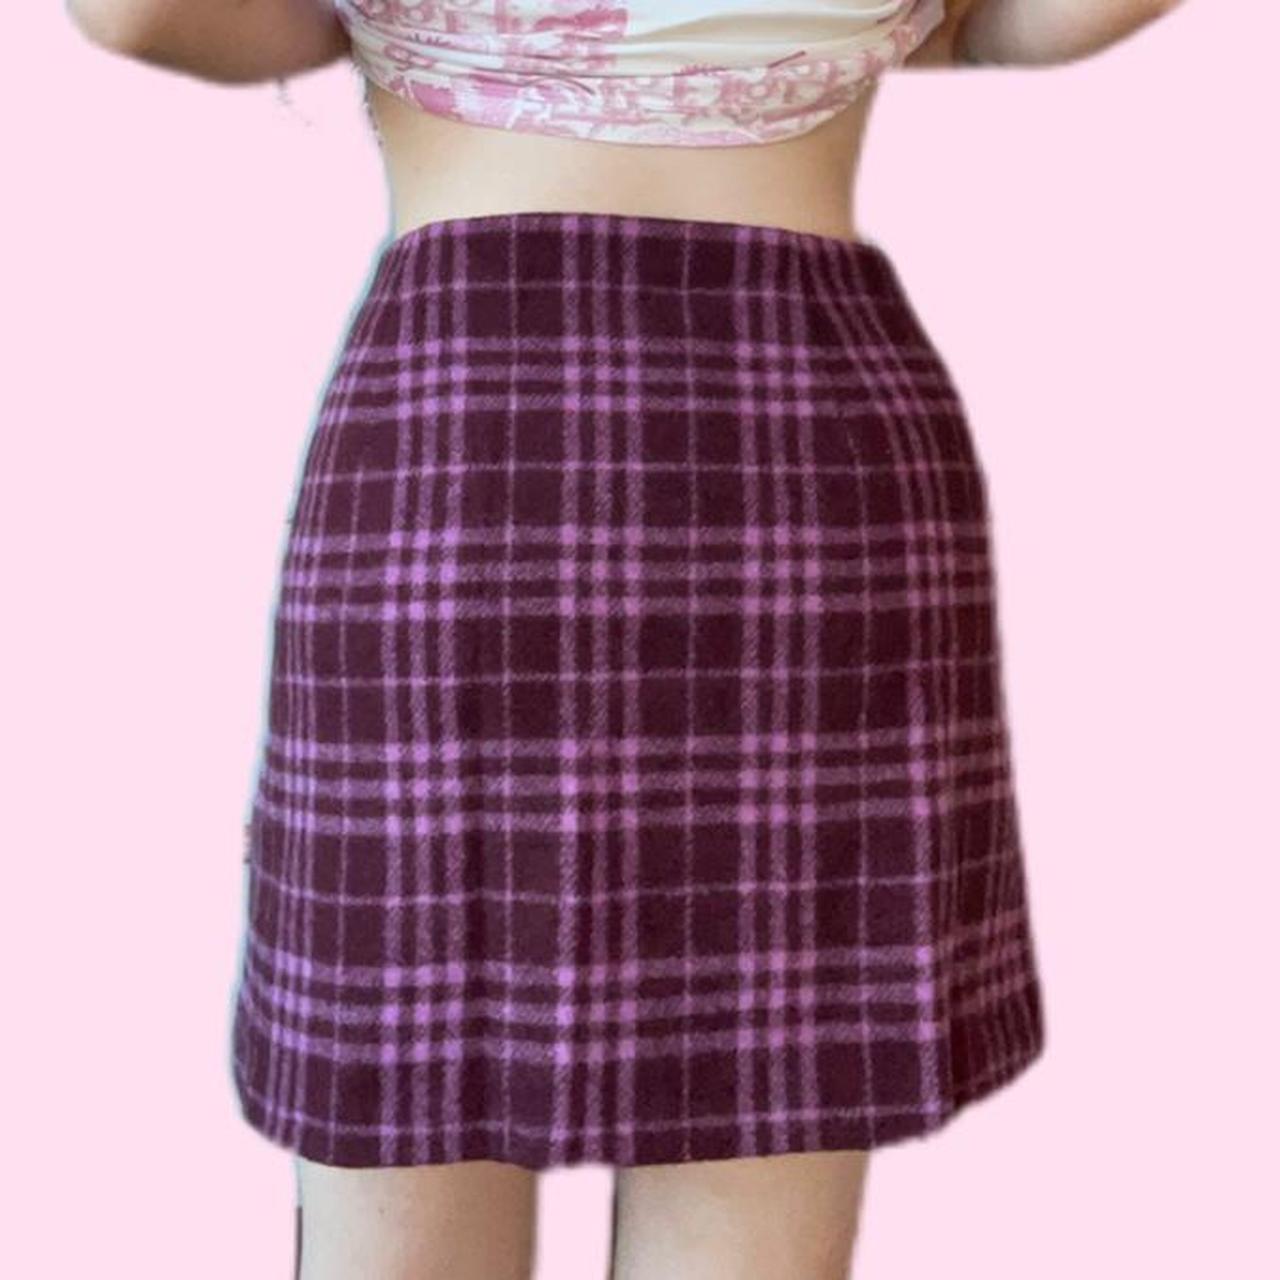 Burberry Women's Pink and Burgundy Skirt (2)